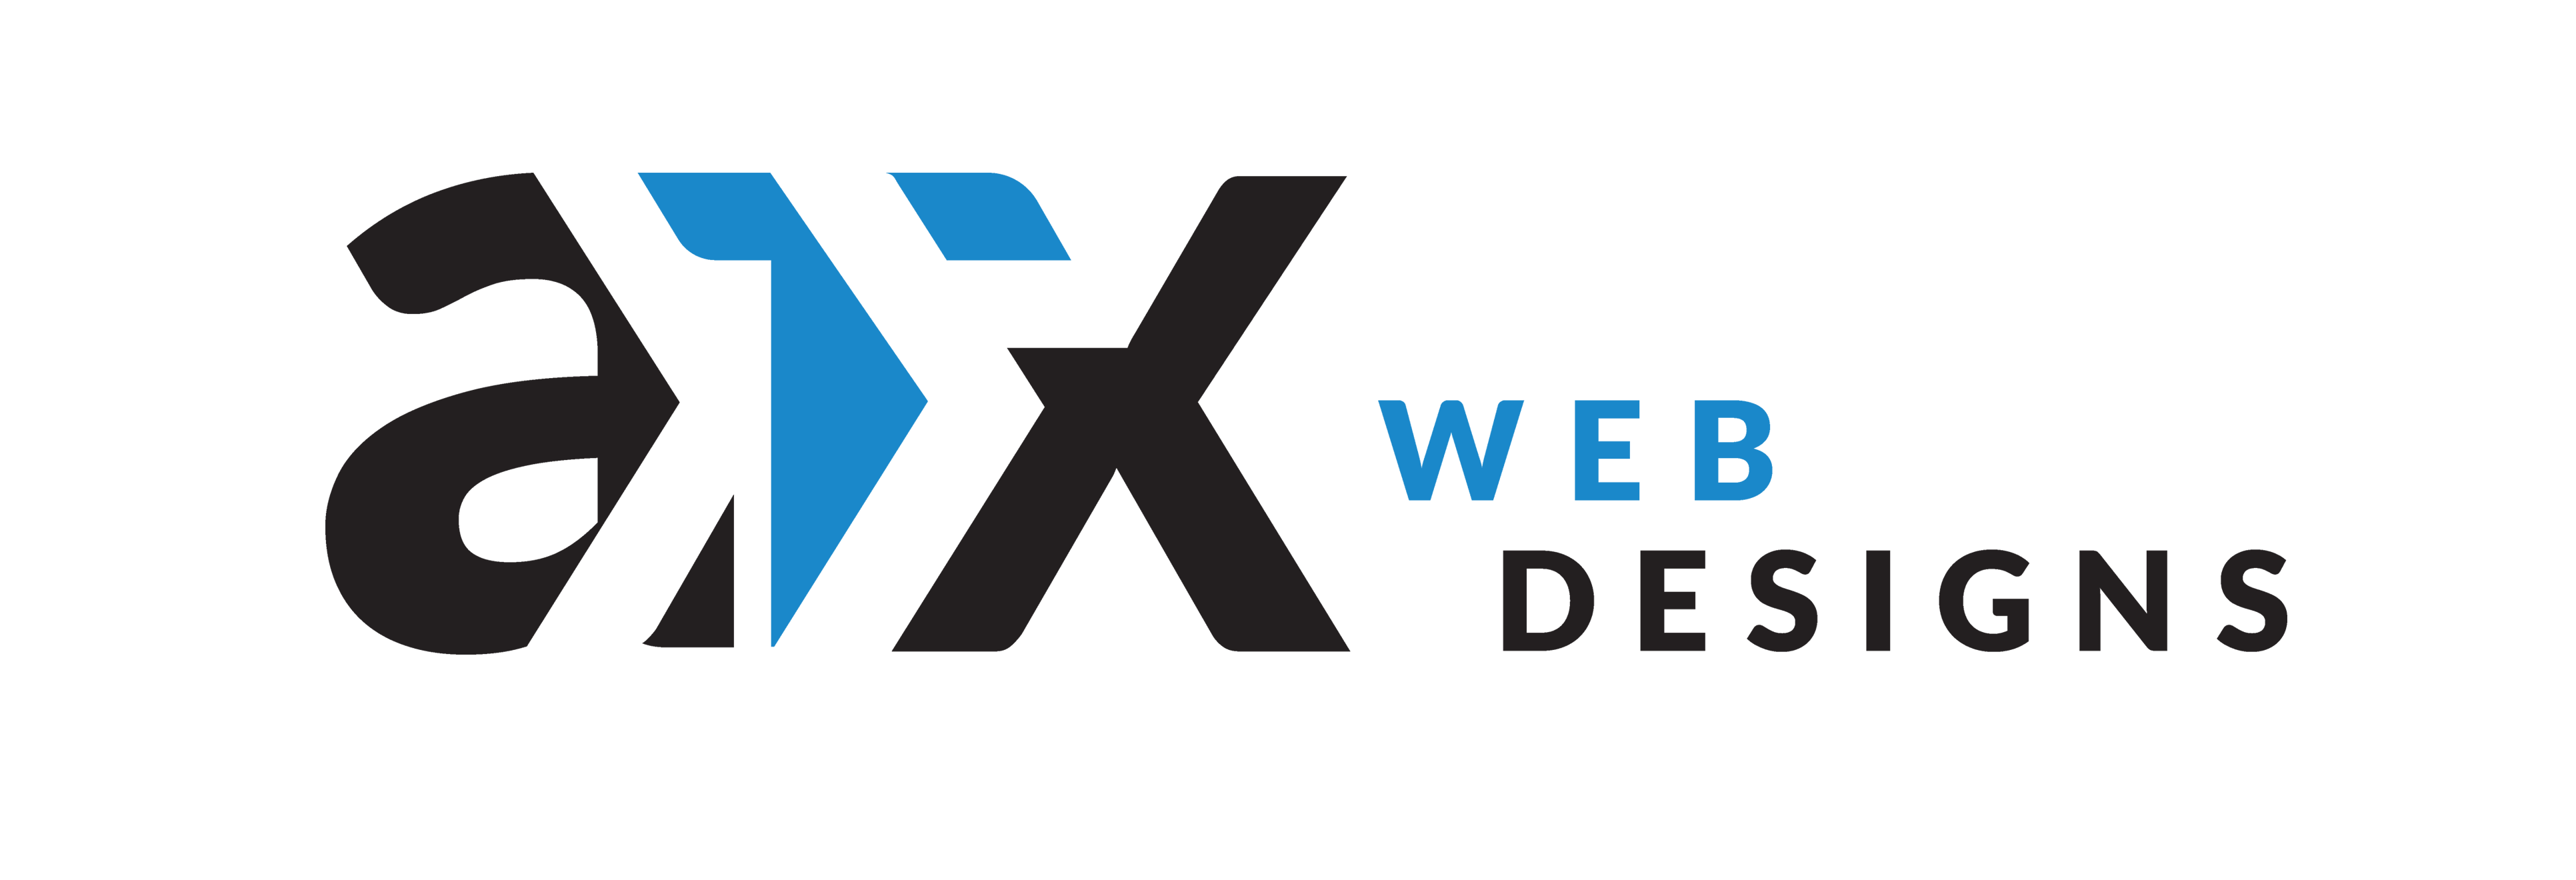 Top Web Design Company Logo: ATX Web Designs